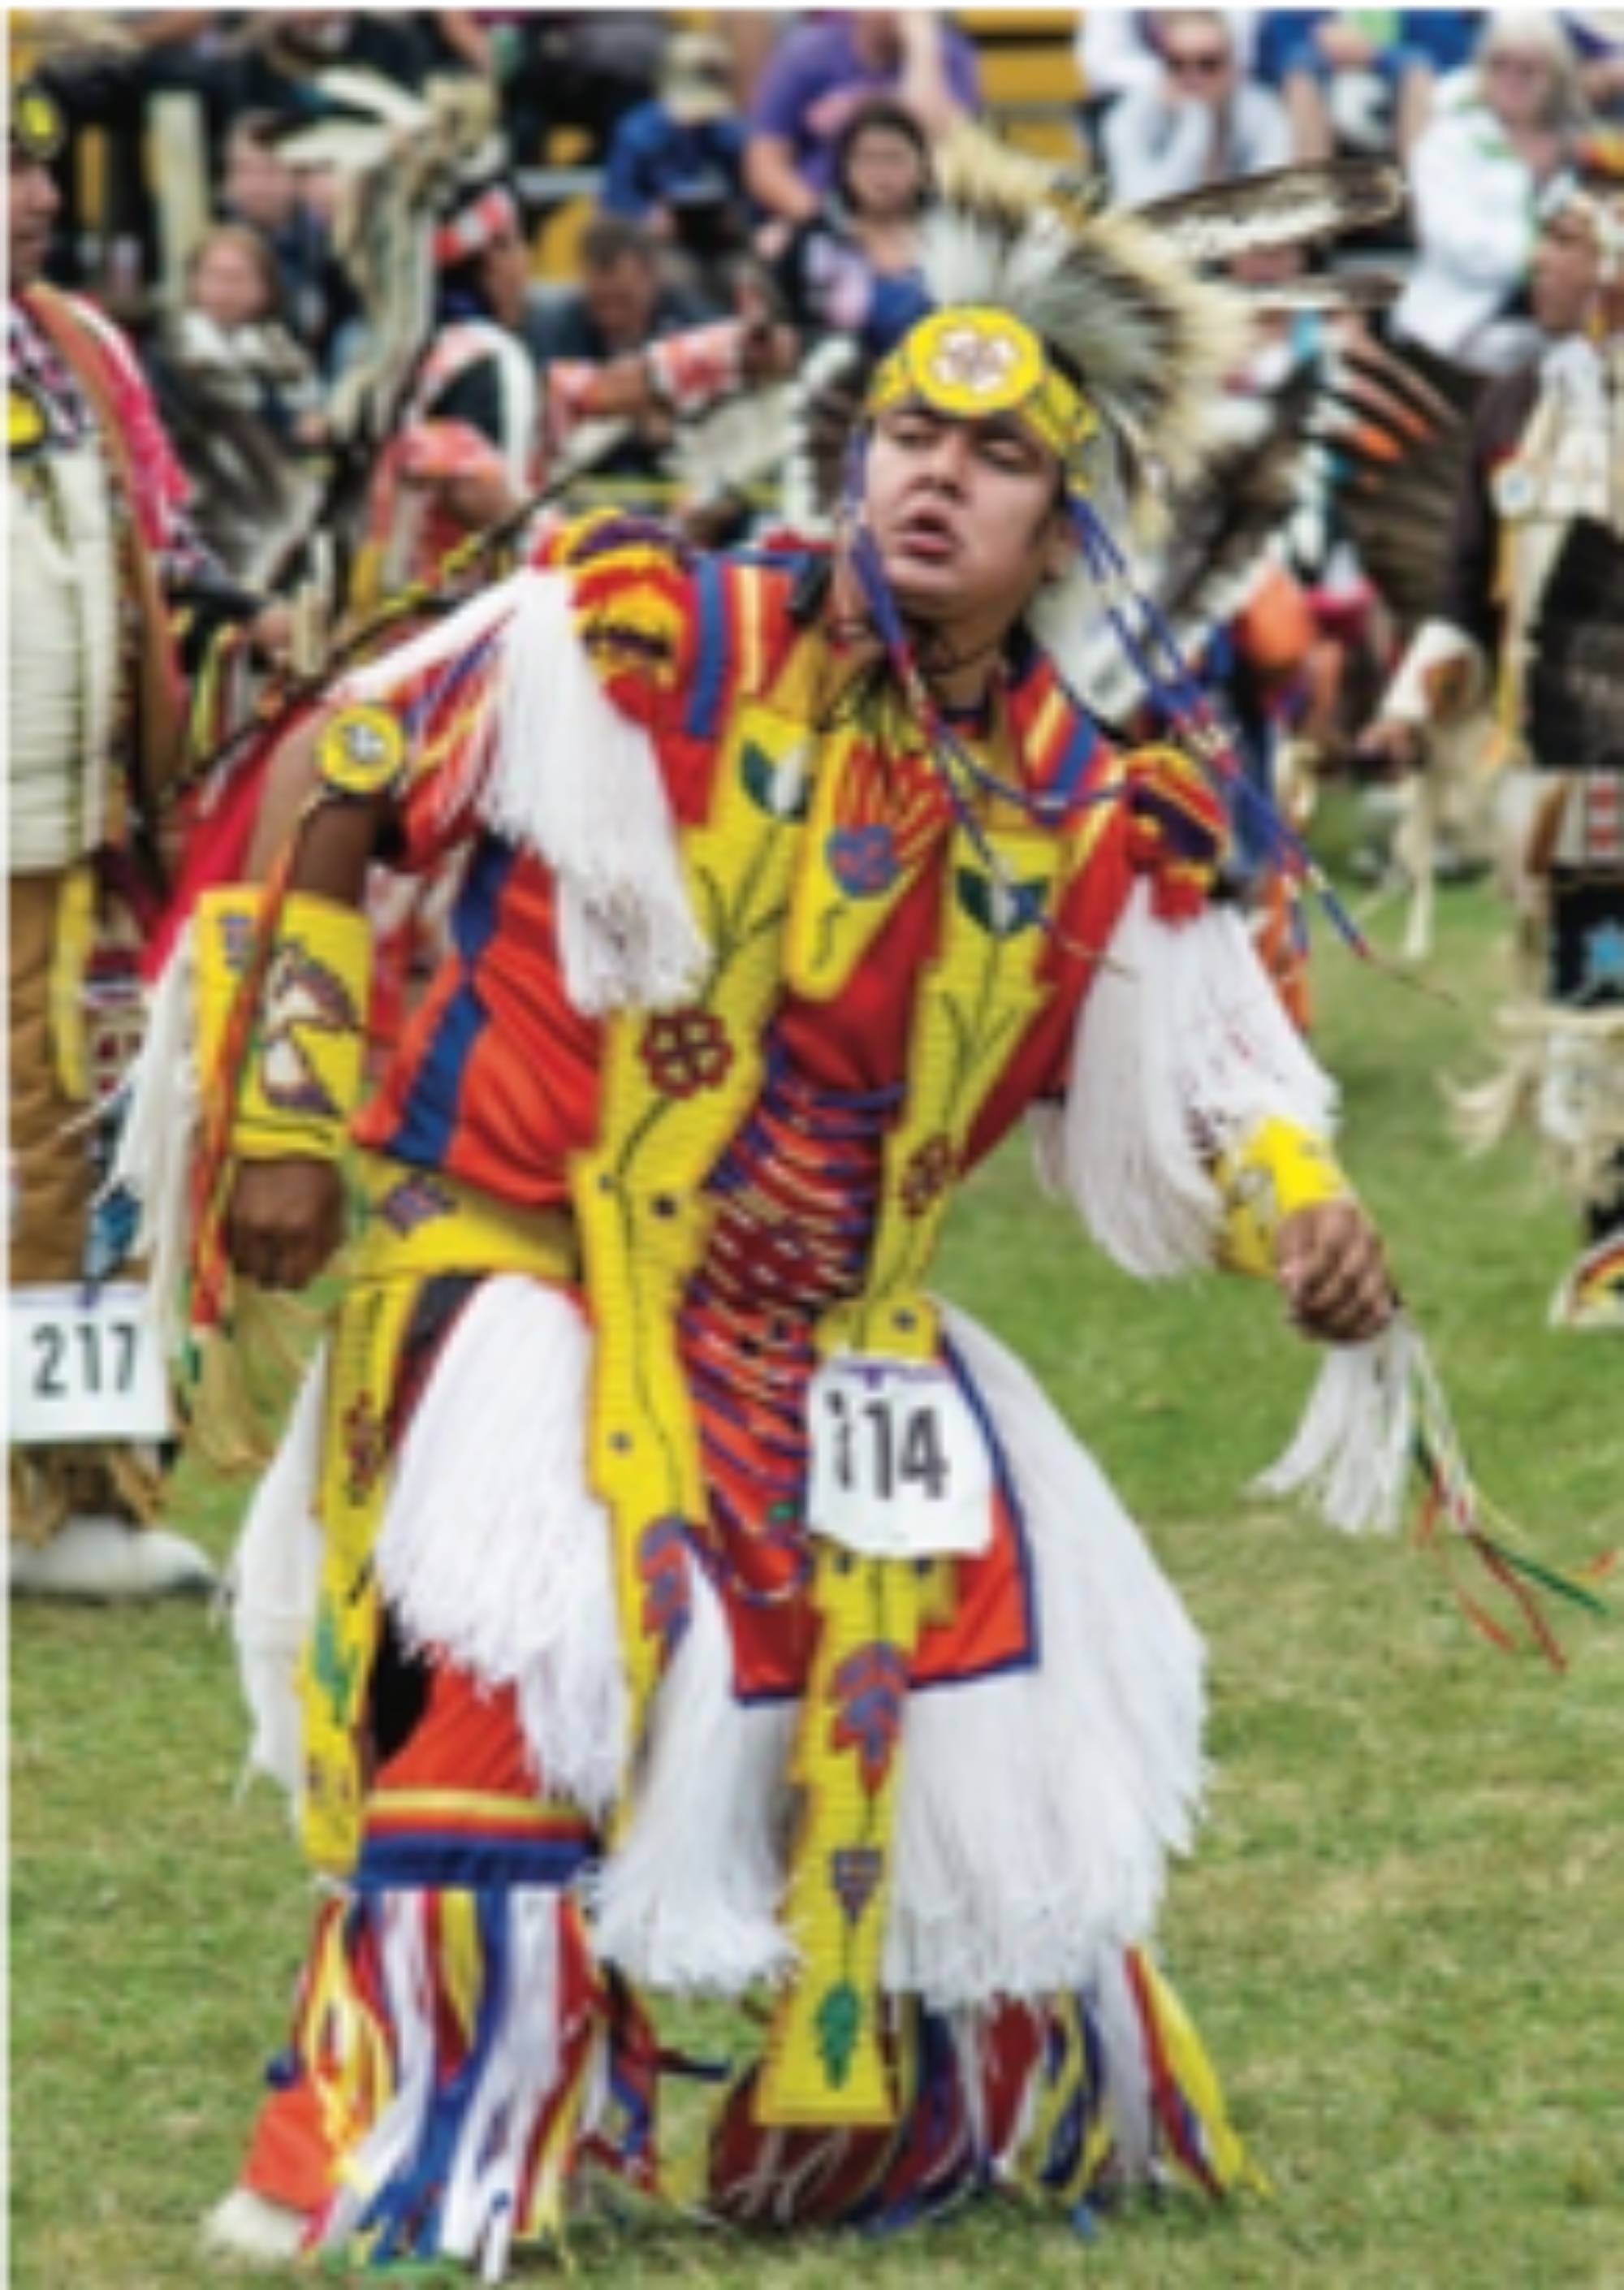 Native male wearing grass dancer regalia dancing at a Pow Wow